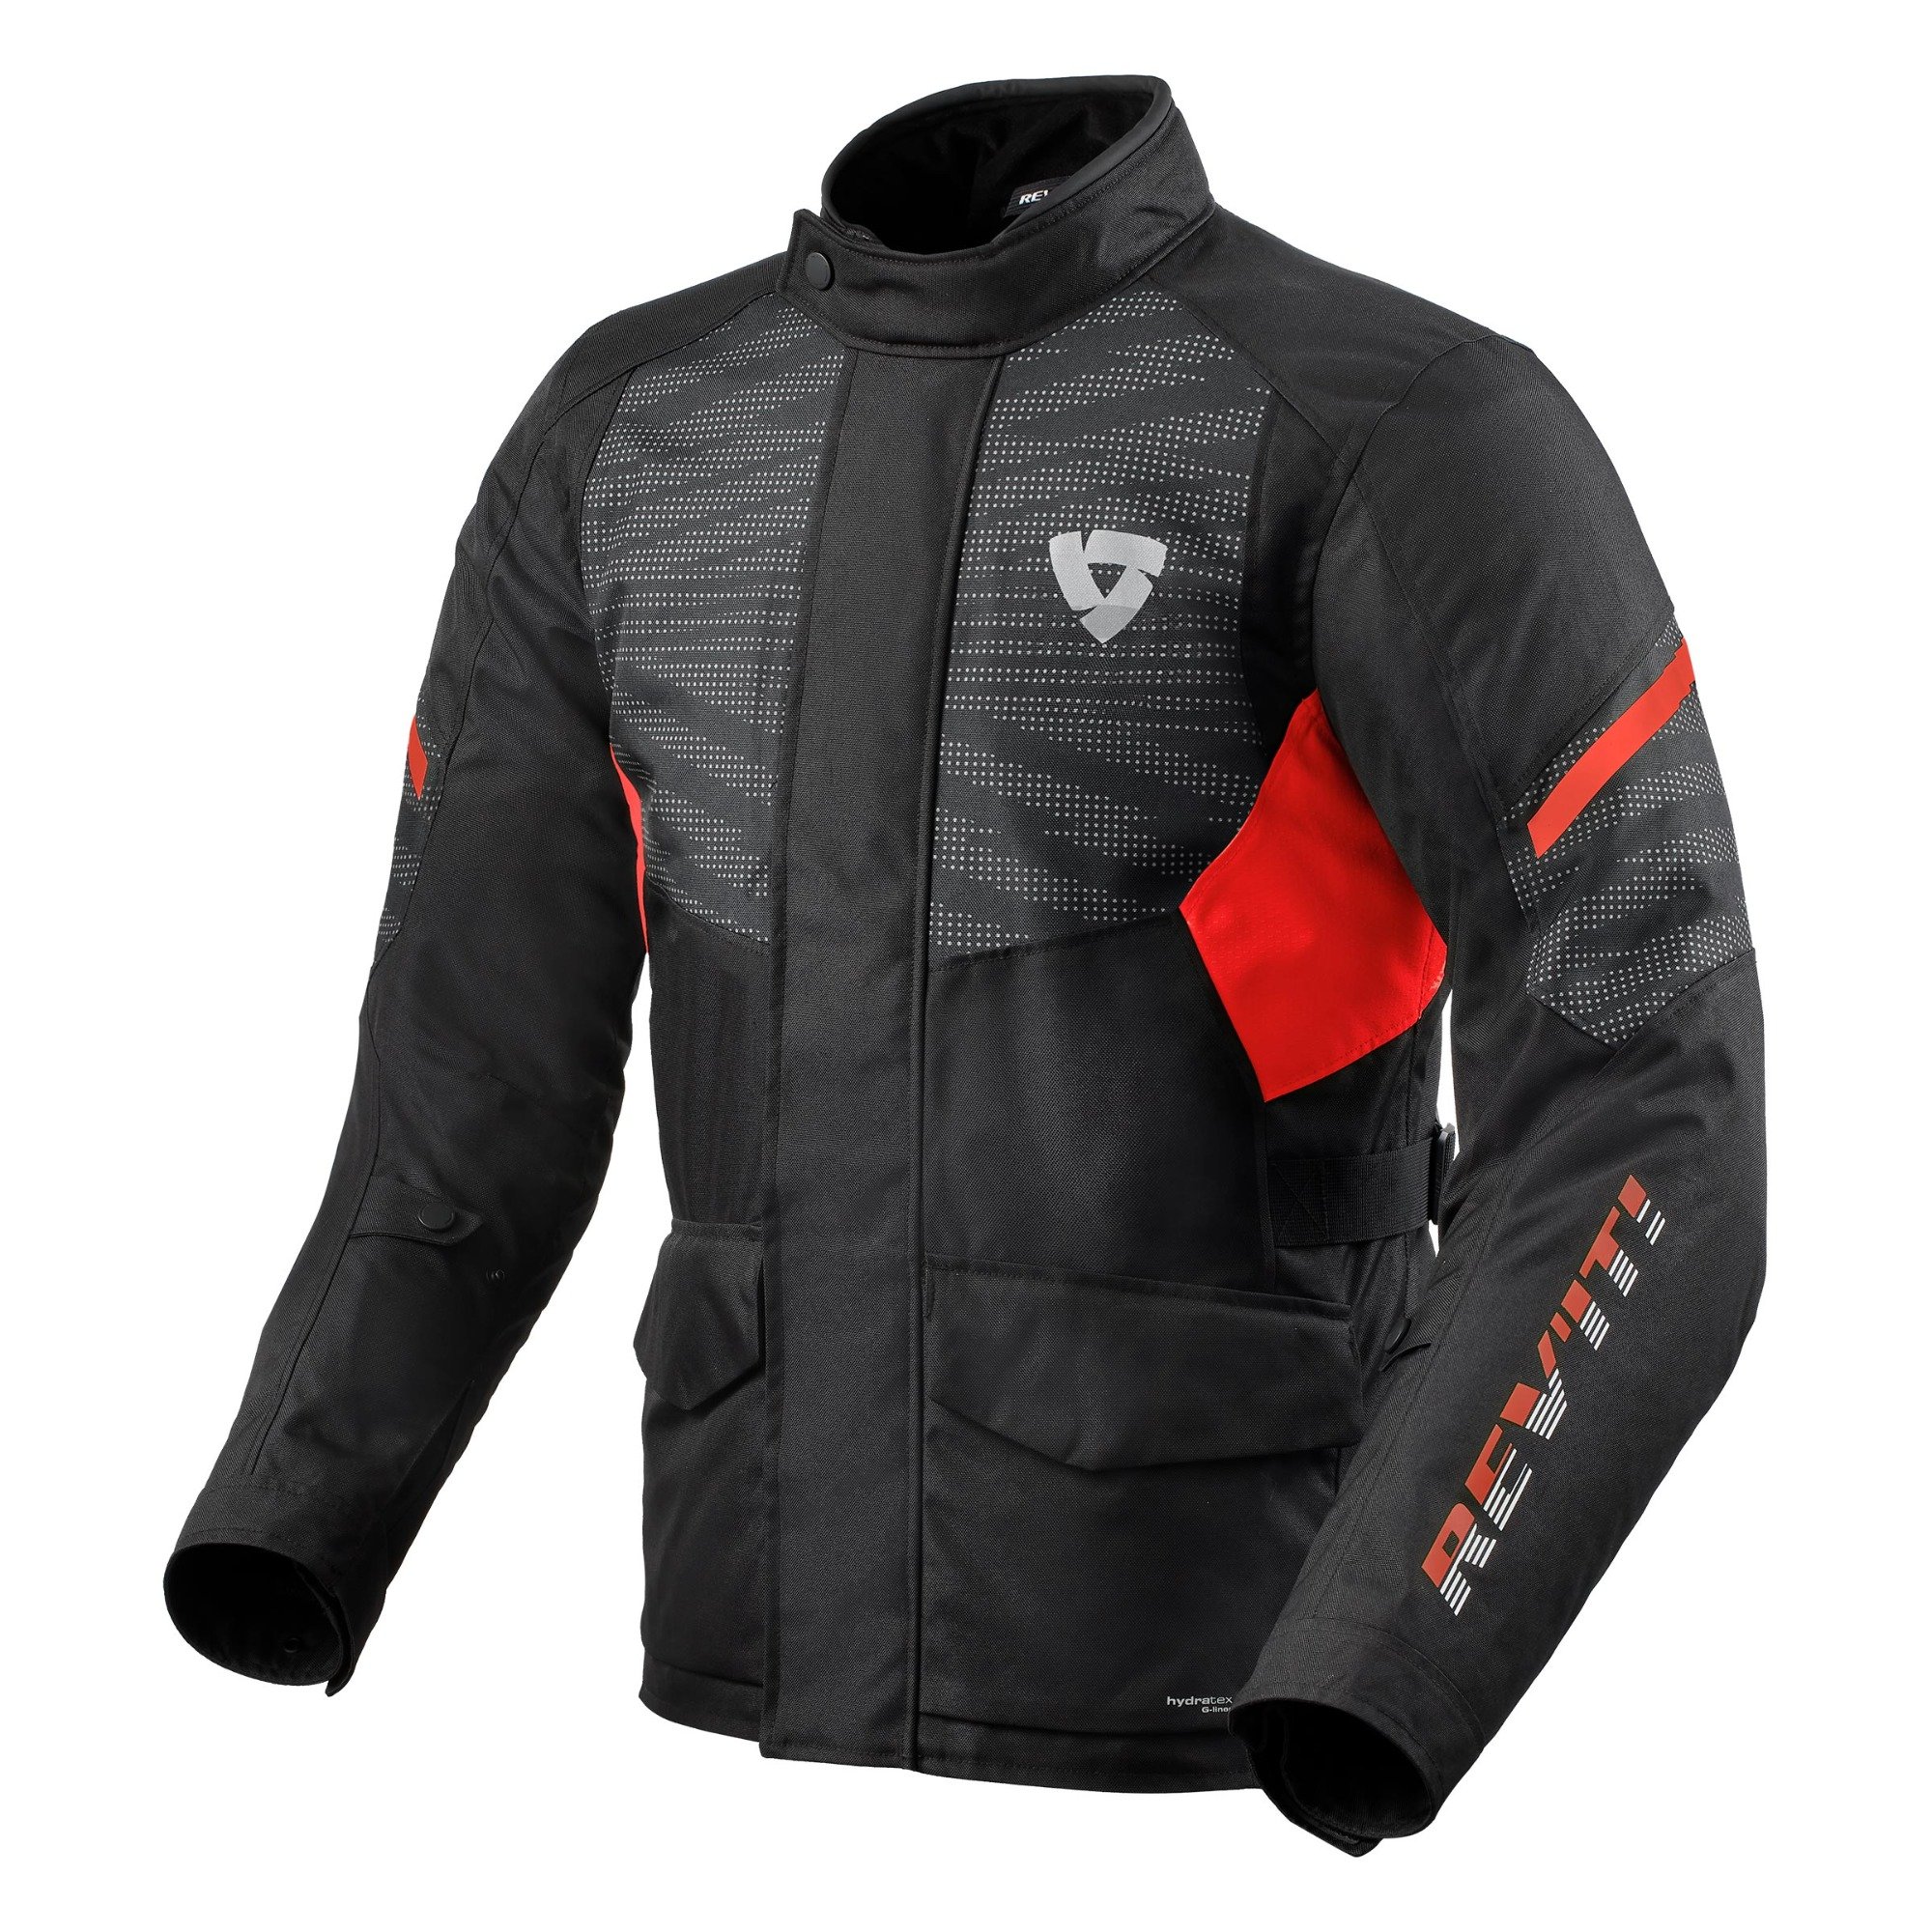 Image of REV'IT! Duke H2O Jacket Black Red Size 4XL EN